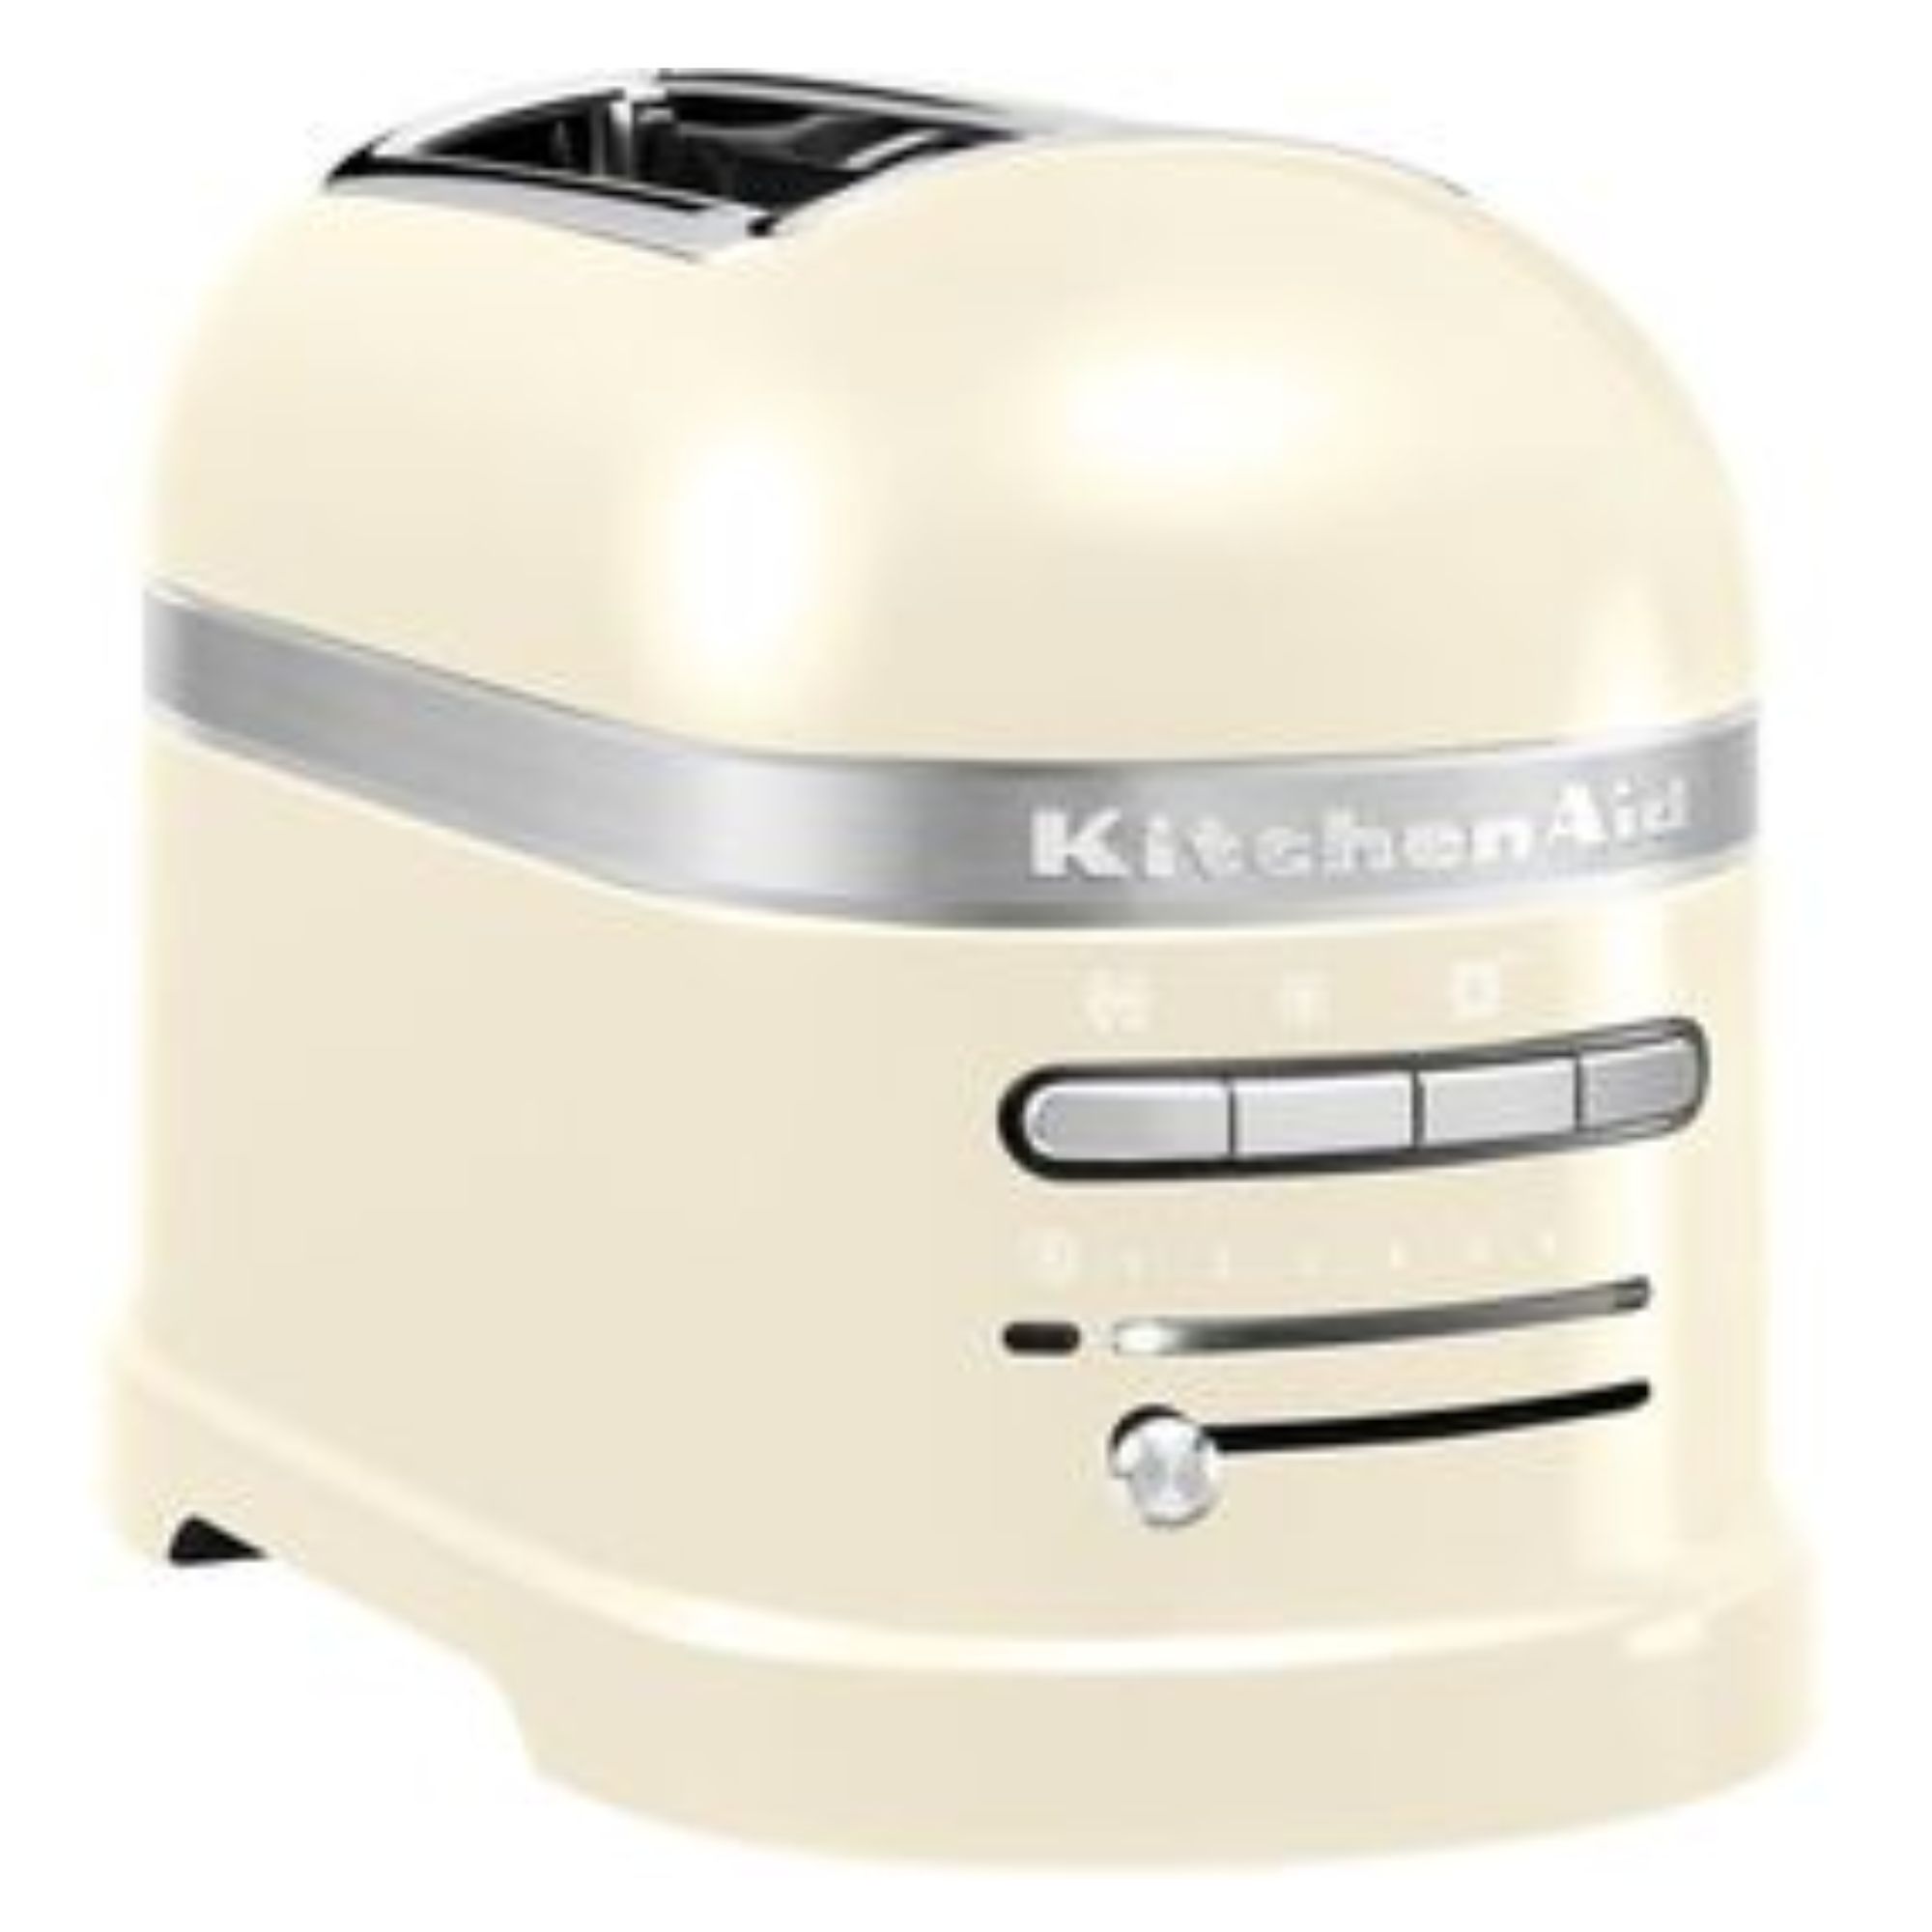 KitchenAid Pro Line toaster in almond cream